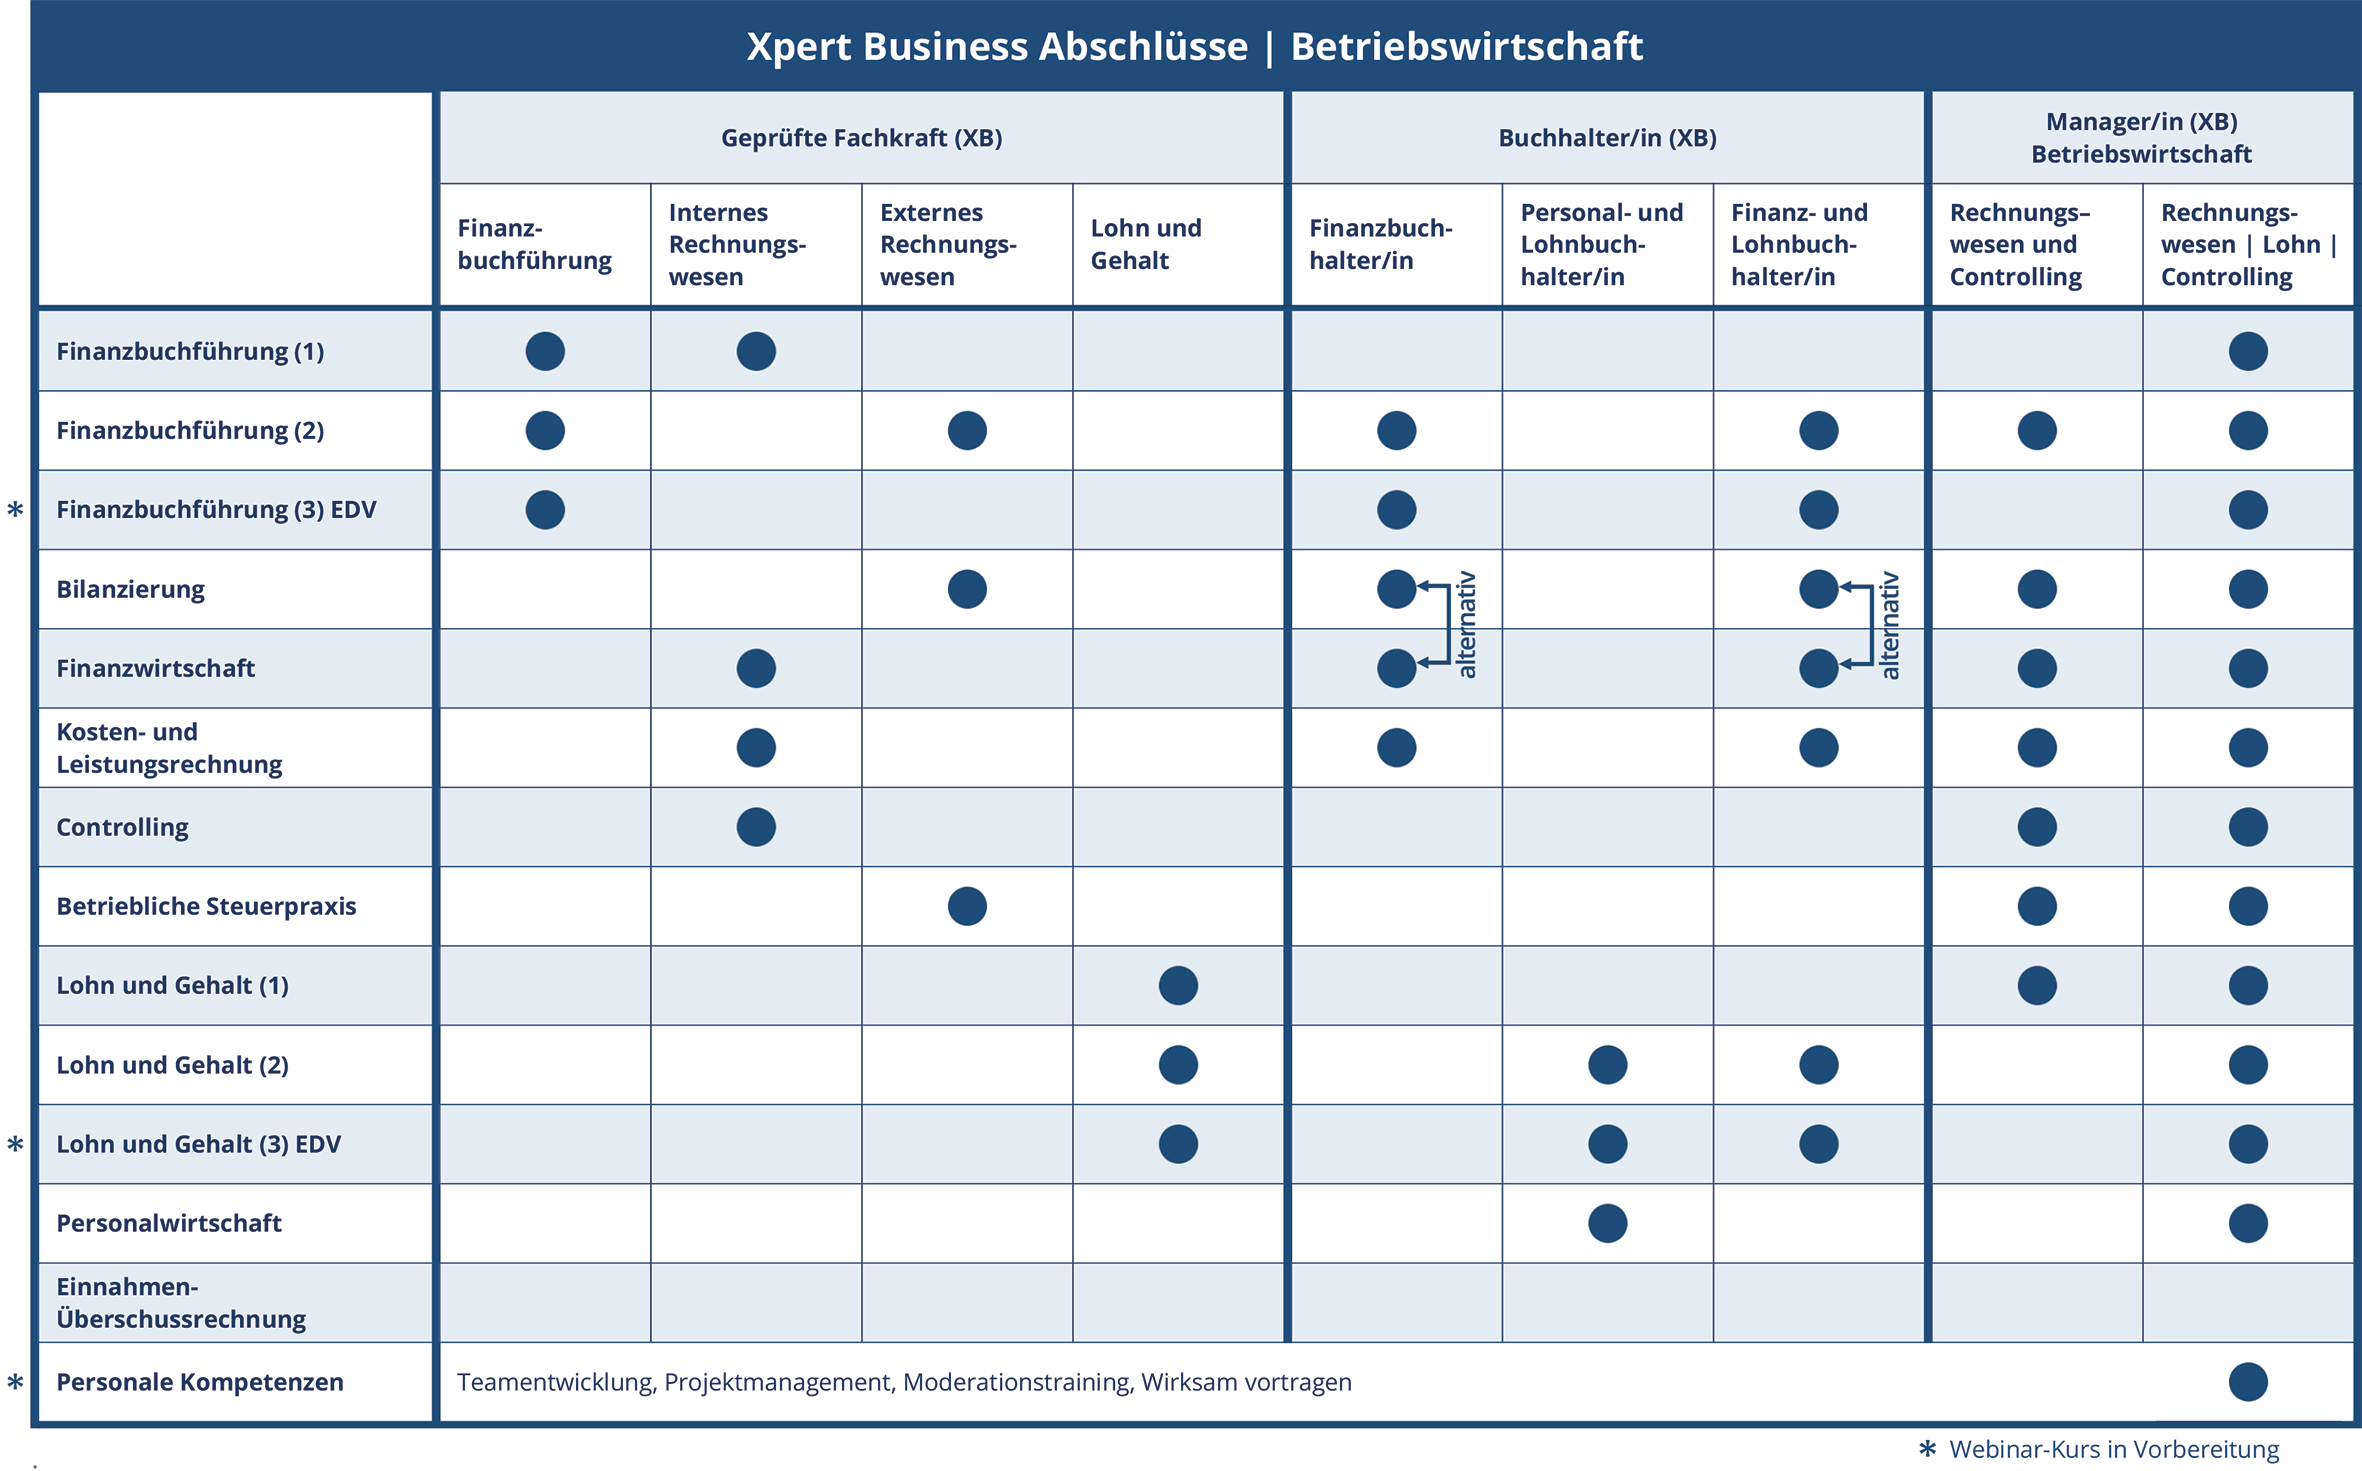 Bildvergrößerung: Tabelle zu den Xpert-Business-Abschlüssen Betriebwirtschaft